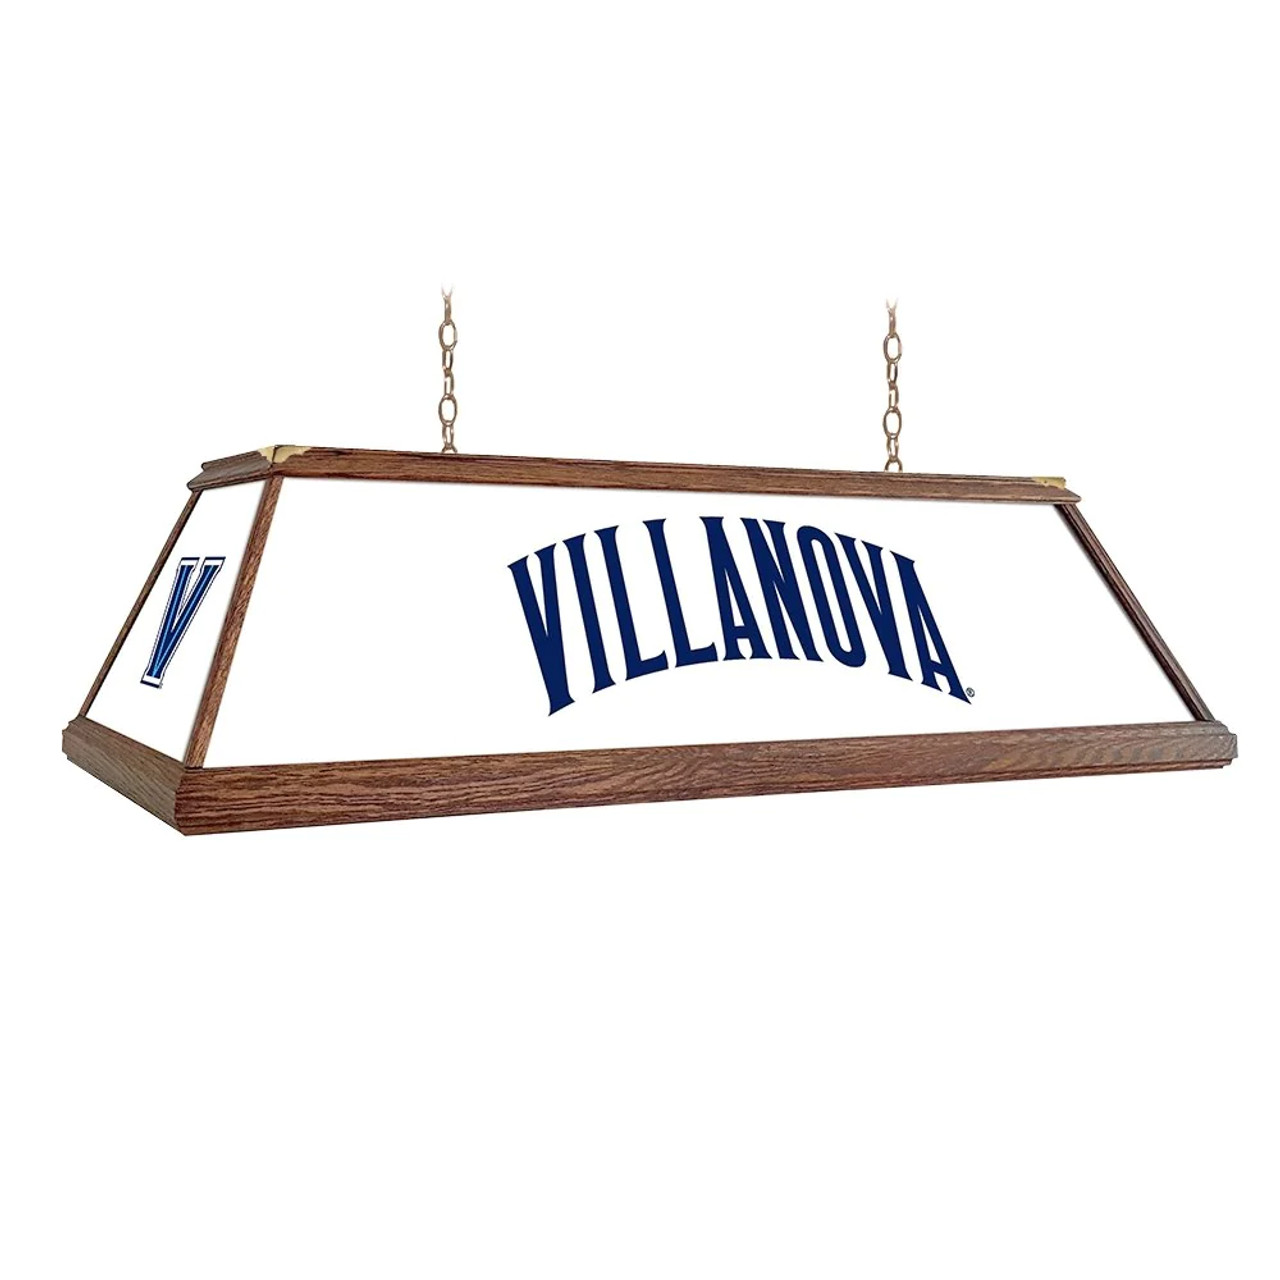 Villanova, Wildcats, Premium, Wood, Billiard, Pool, Table, Light, Lamp, NCNOVA-330-01A, NCNOVA-330-01B, The Fan-Brand, 688099400927